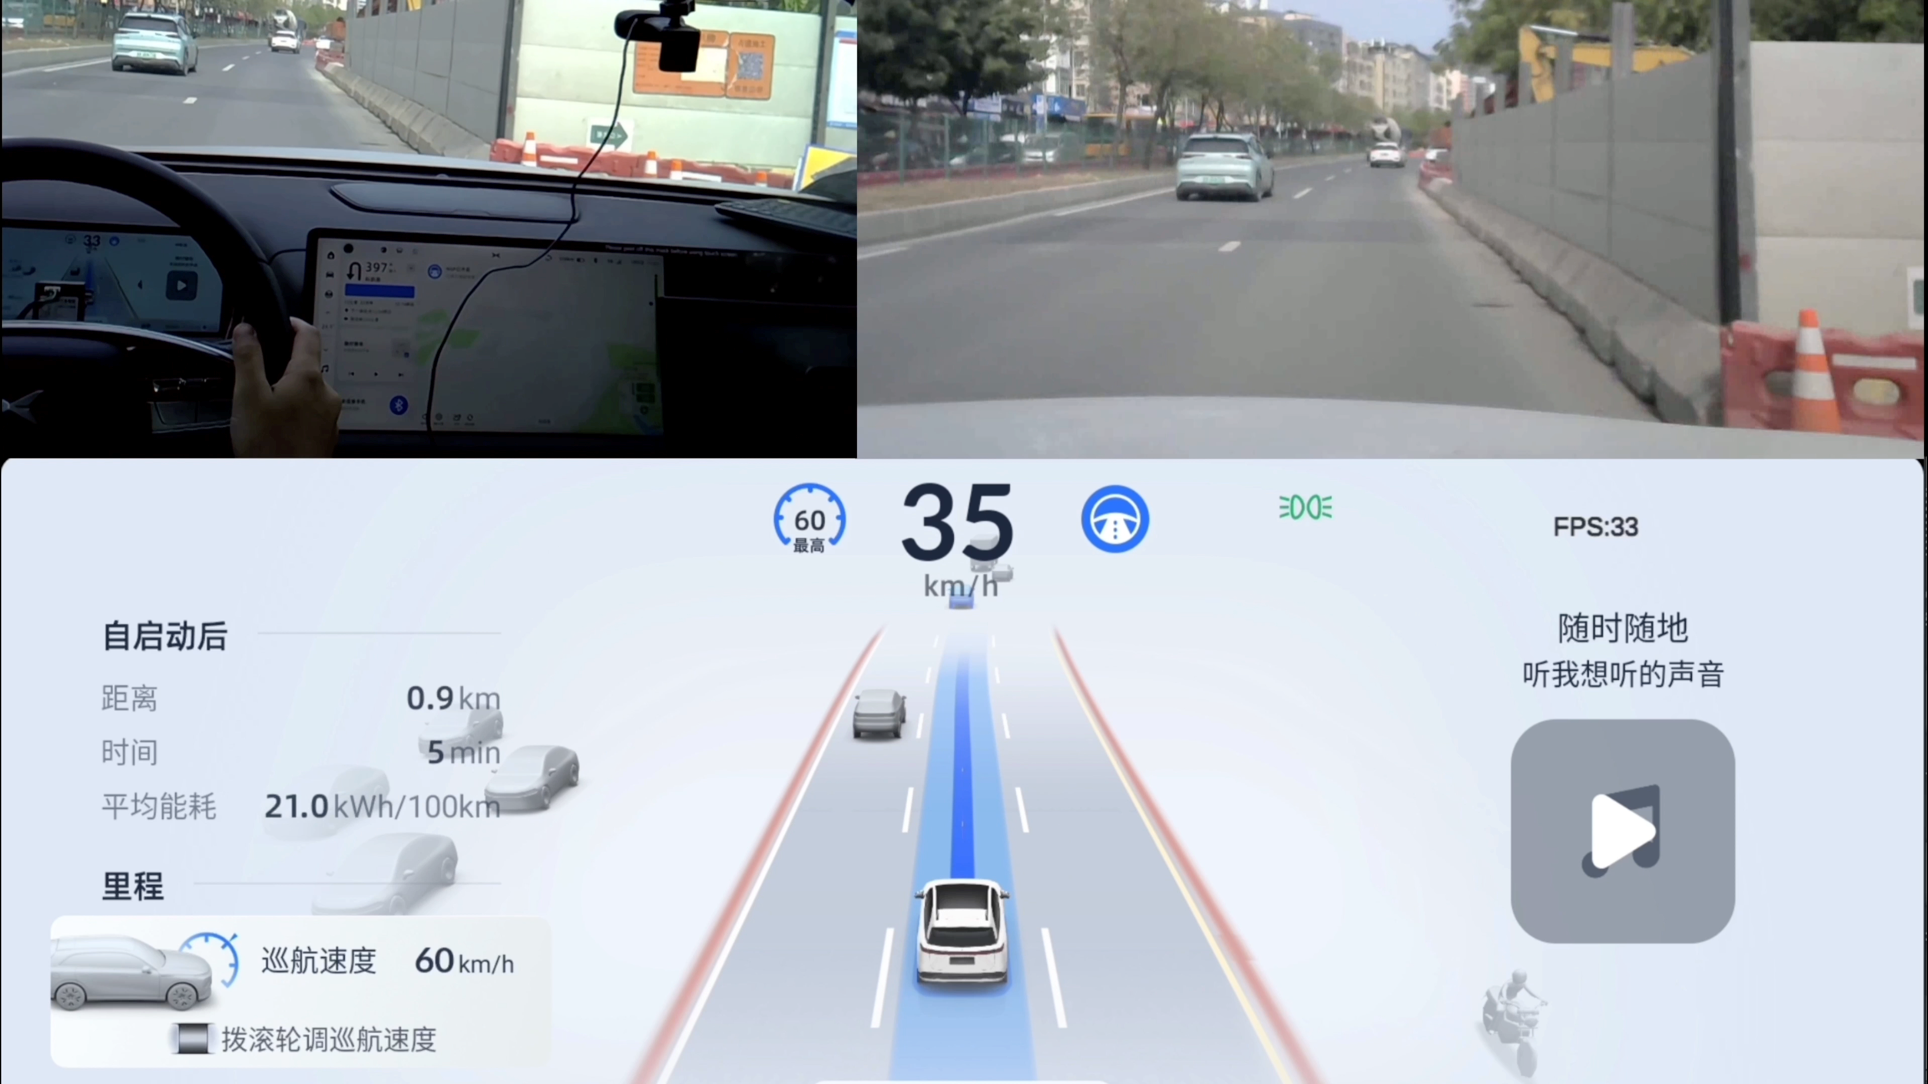 XNGP: Small Steps Towards Full Autonomous Driving for Xiaopeng Motors